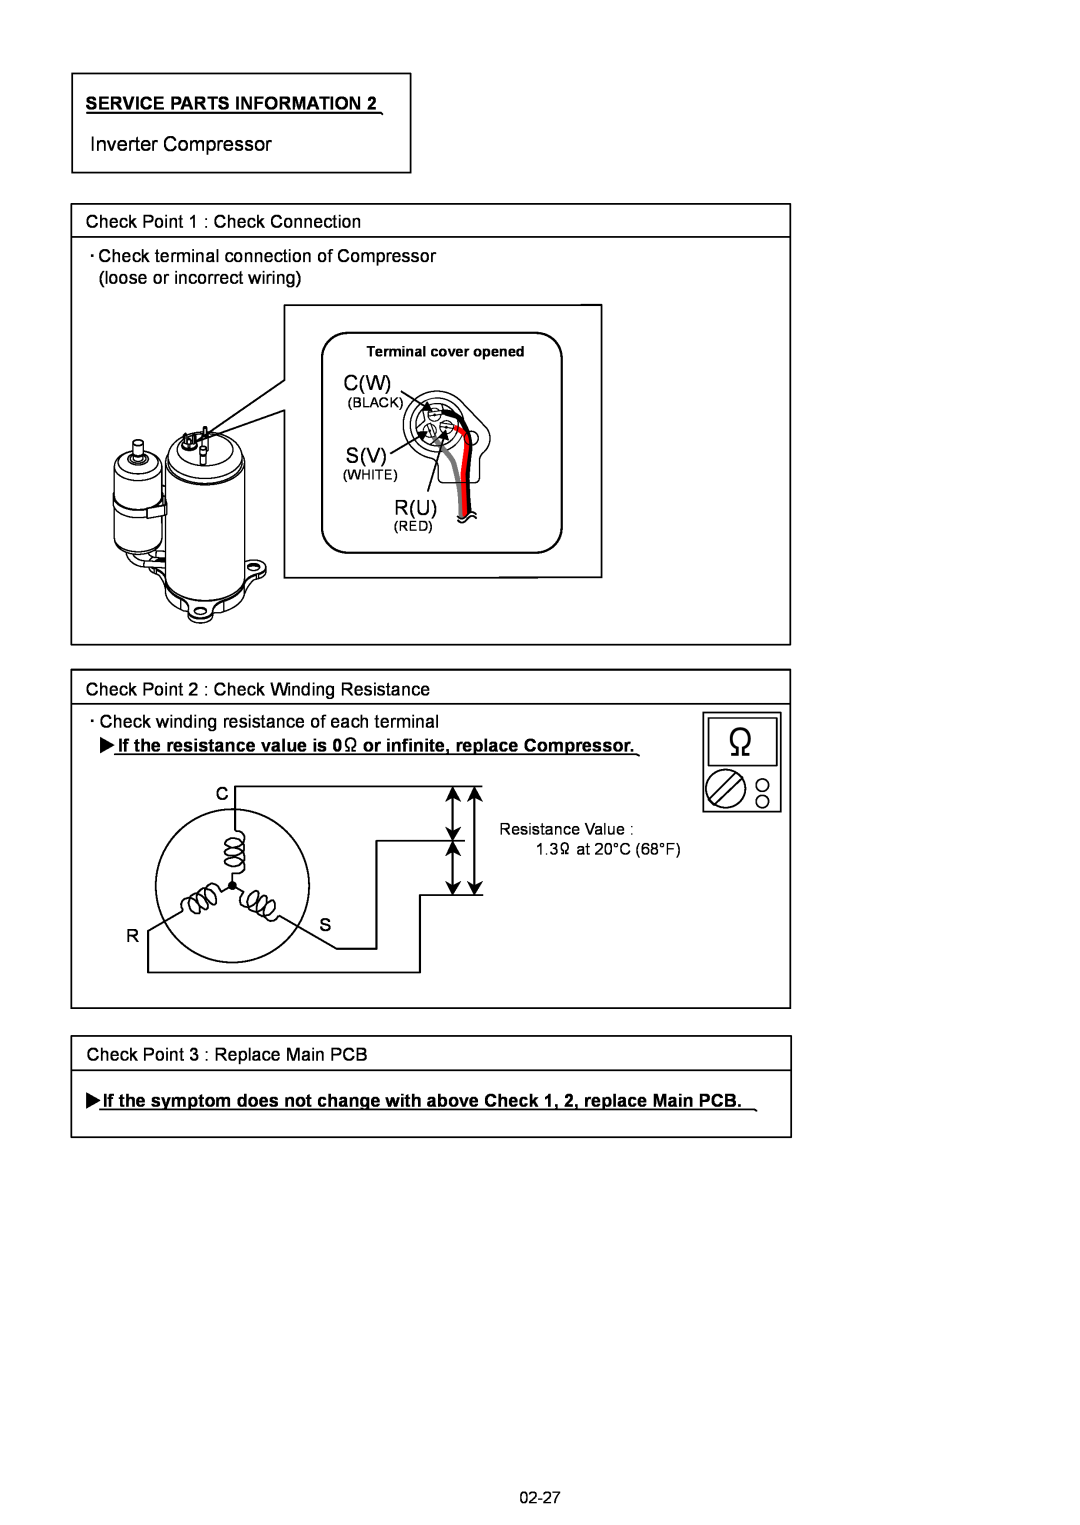 Fujitsu AOU09RL2, ASU12RL2, AOU12RL2 manual Inverter Compressor, Service Parts Information 